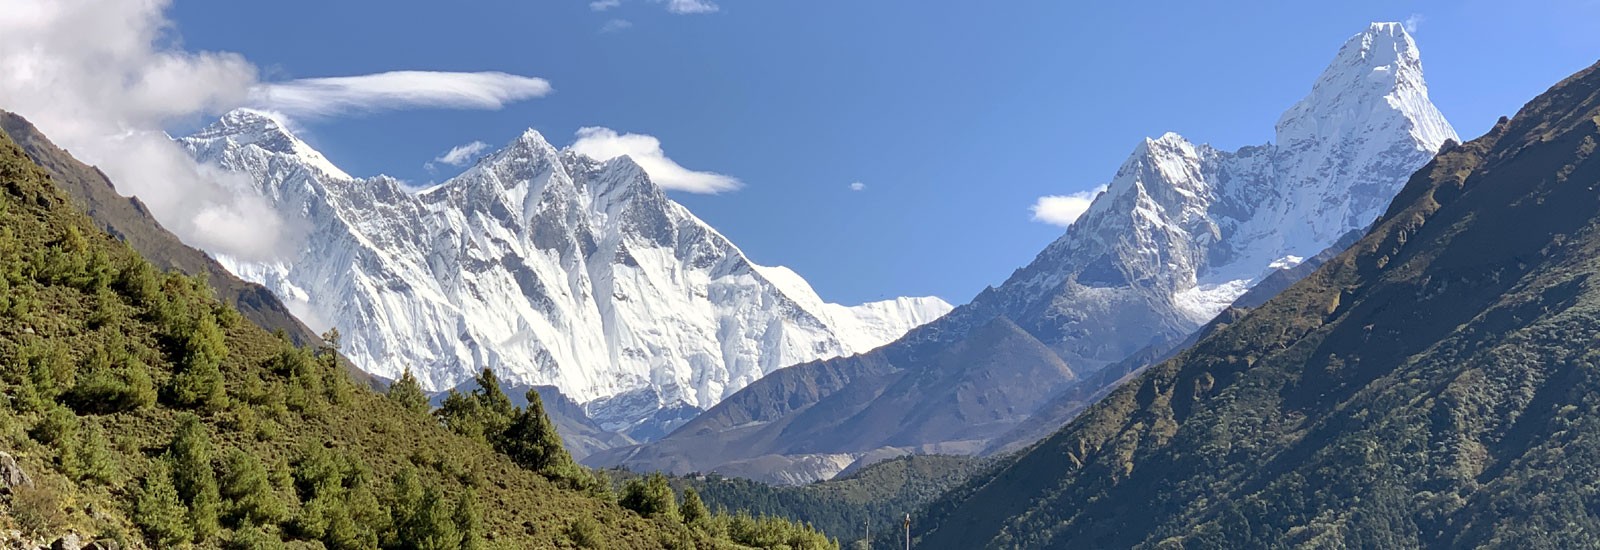 Mt. Everest Range From Kyangjuma